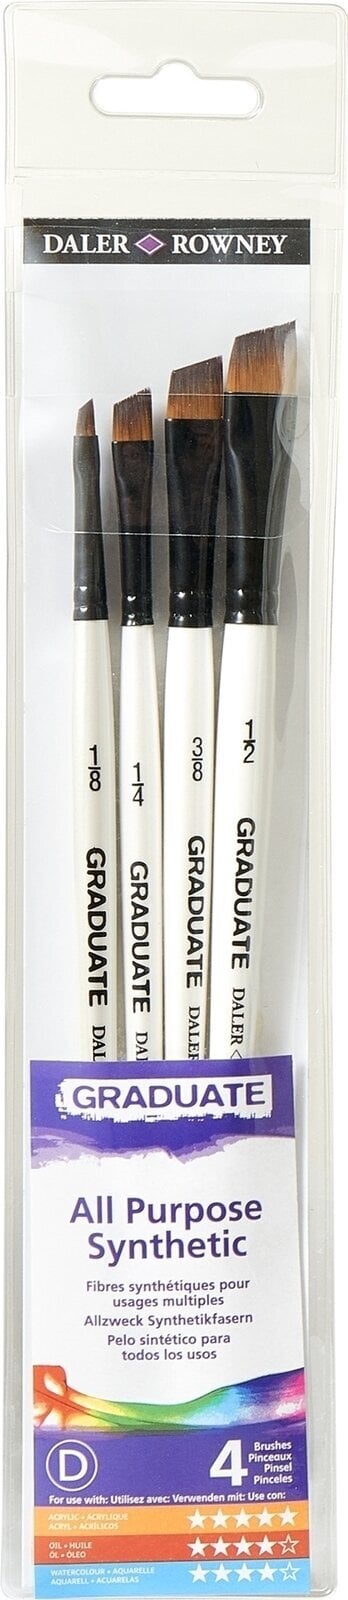 Paint Brush Daler Rowney Graduate Multi-Technique Brush Synthetic Set of Brushes 1 pc